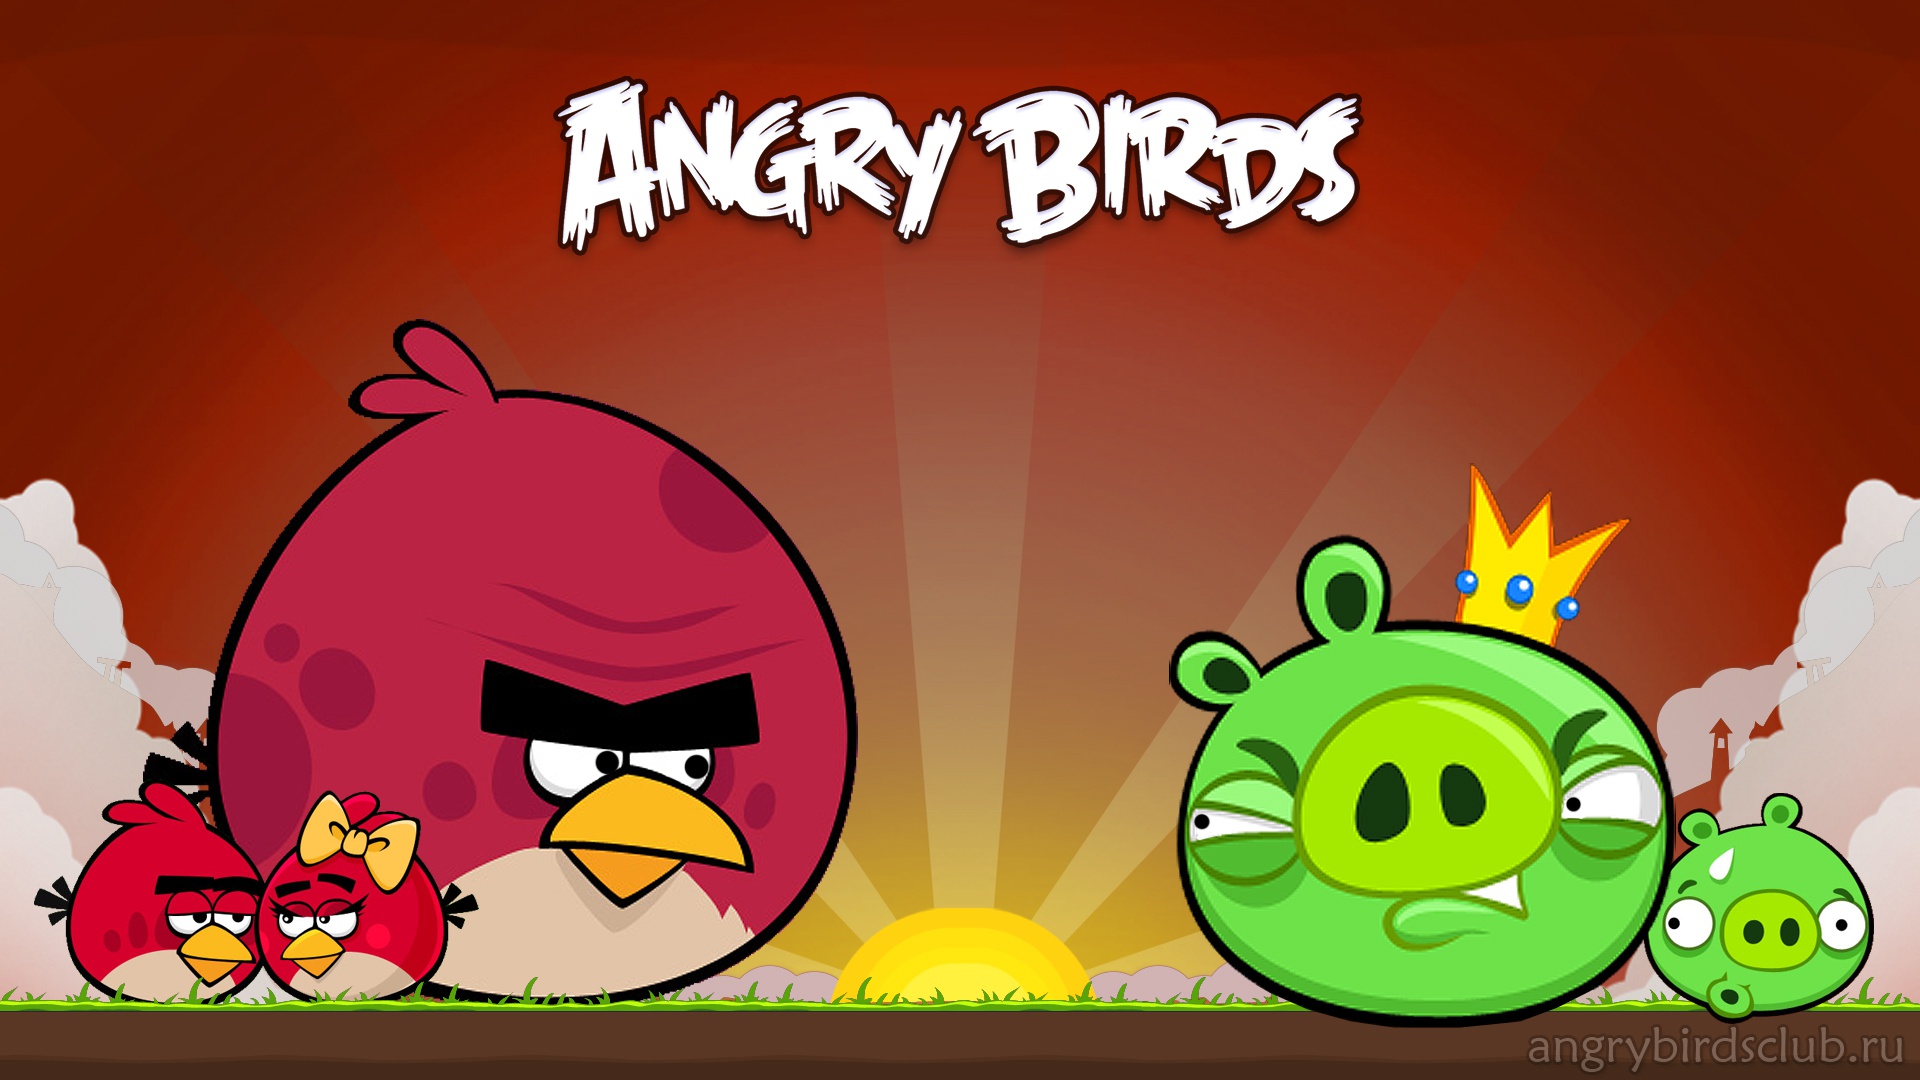 Angry Birds Photos Wallpaper Gallery - ARASPOT.com